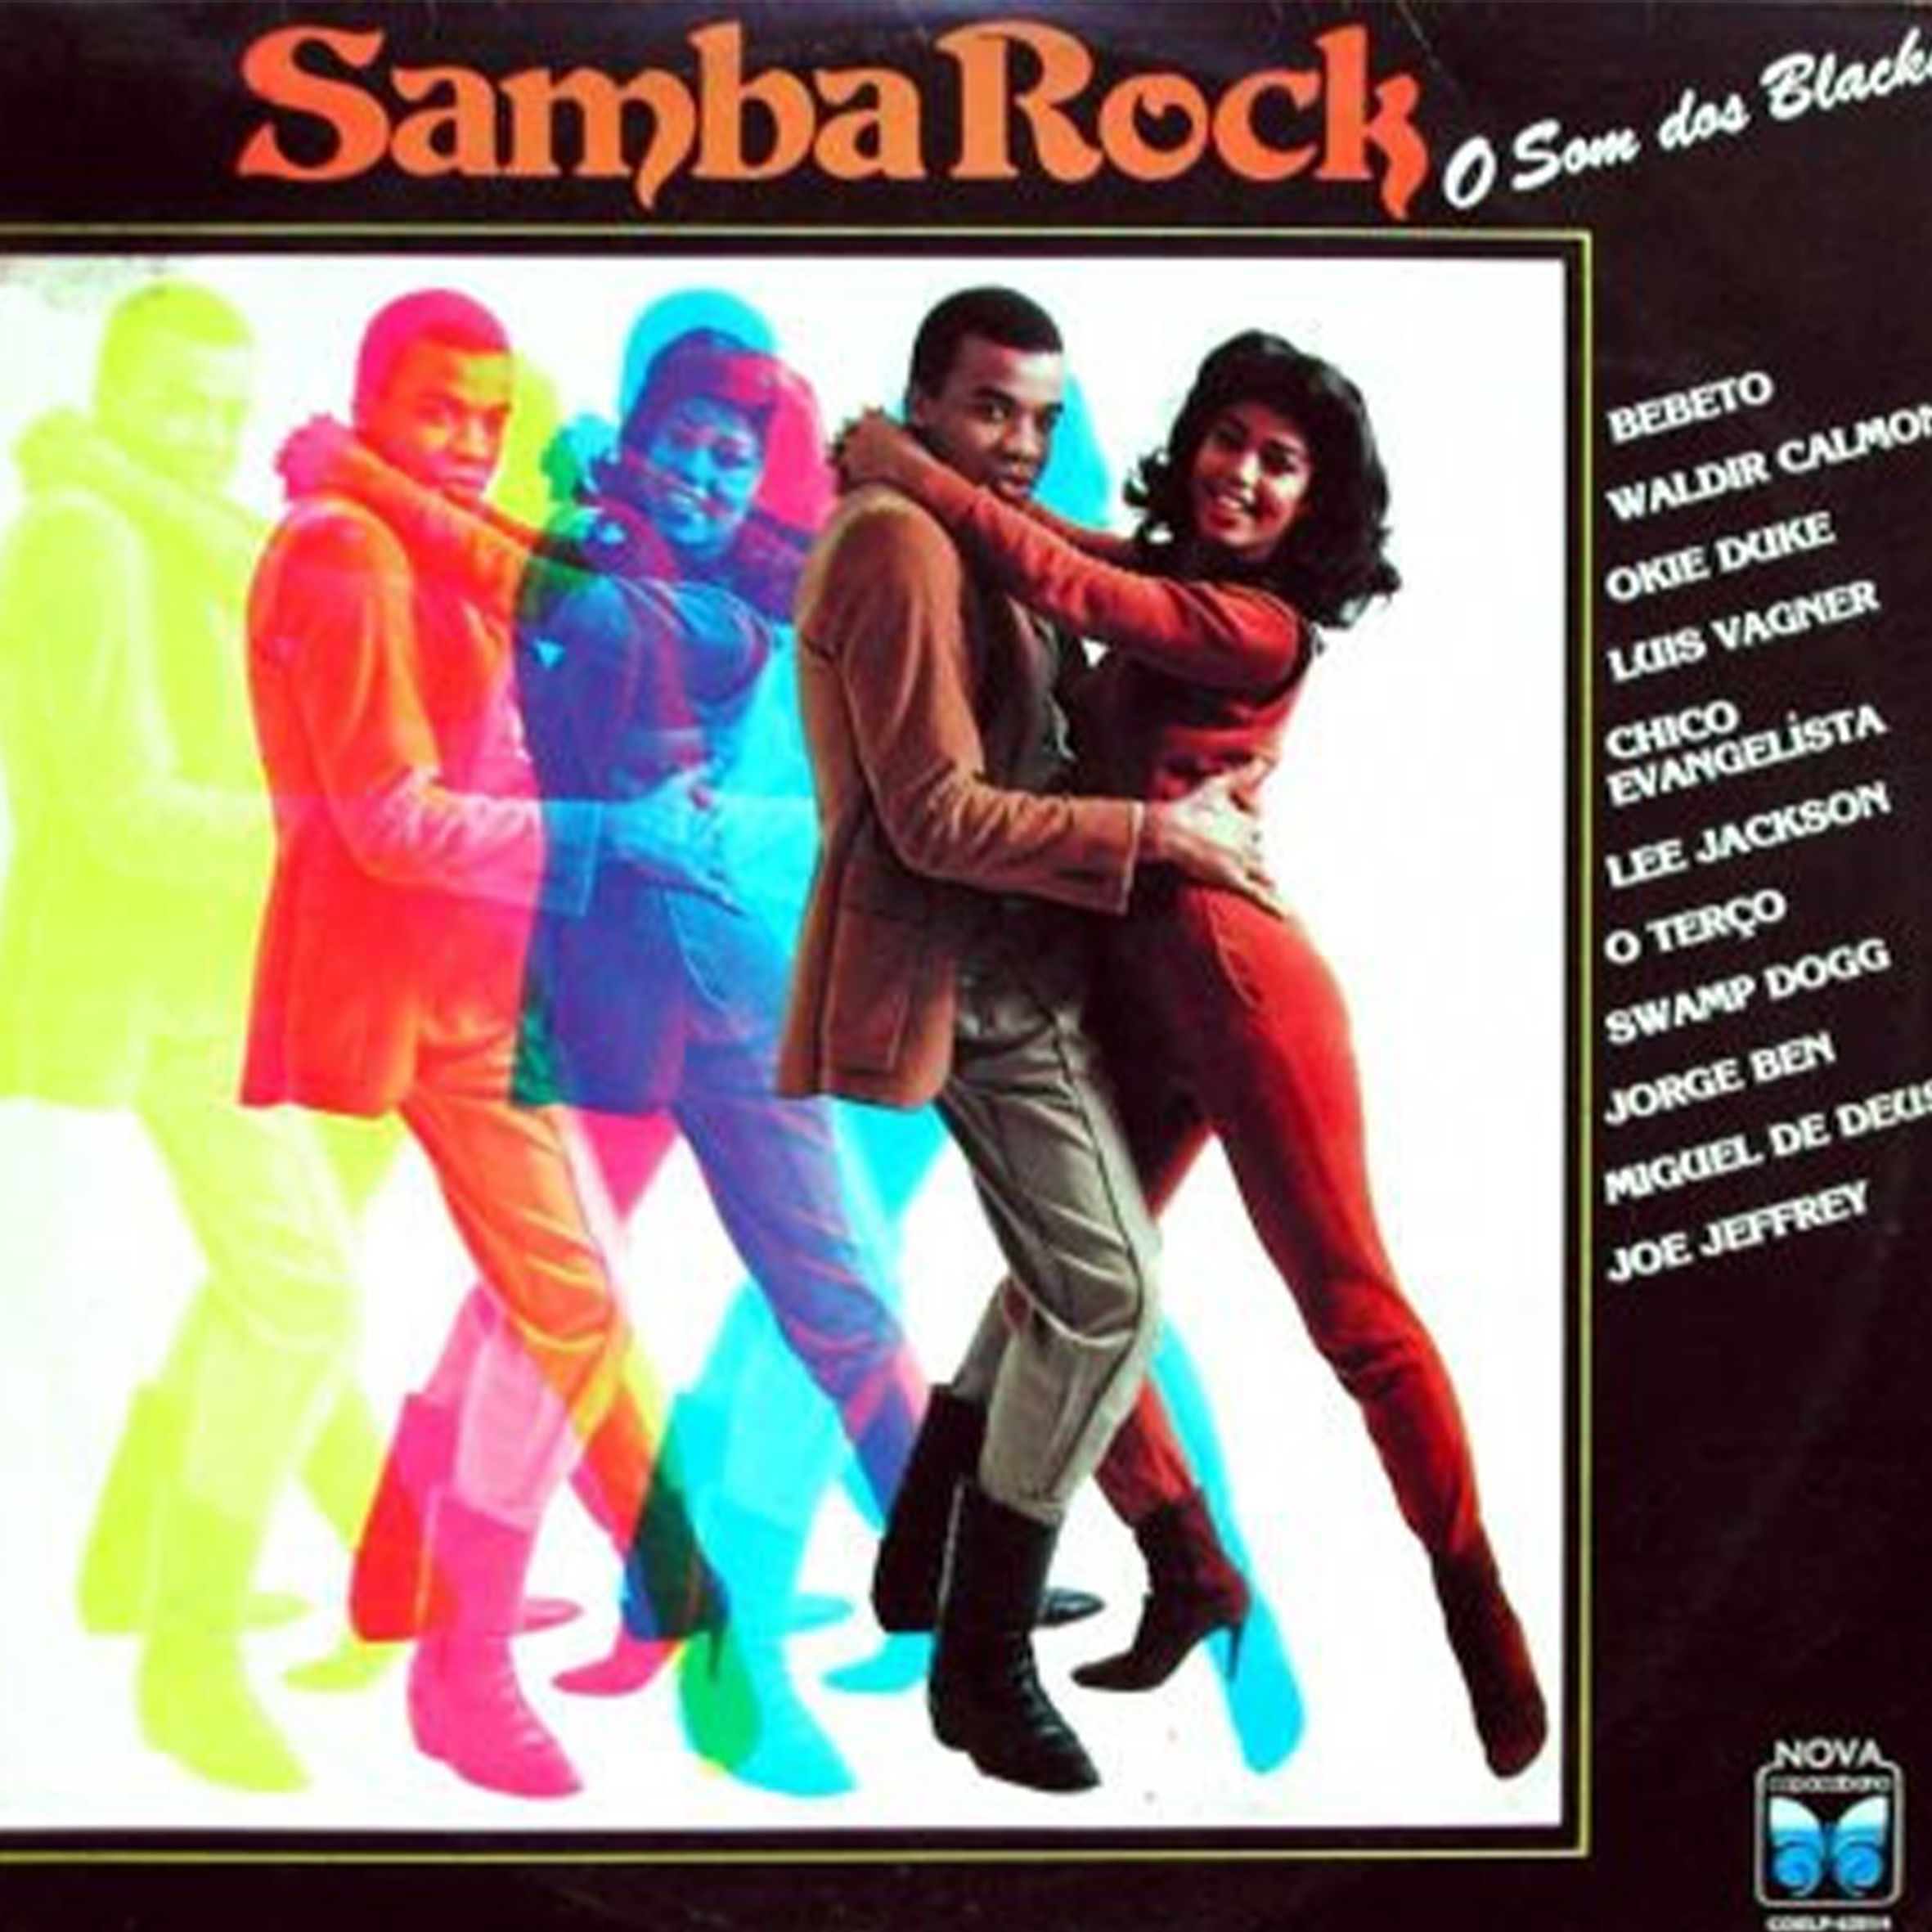 Vinil - Samba Rock O Som Dos Blacks